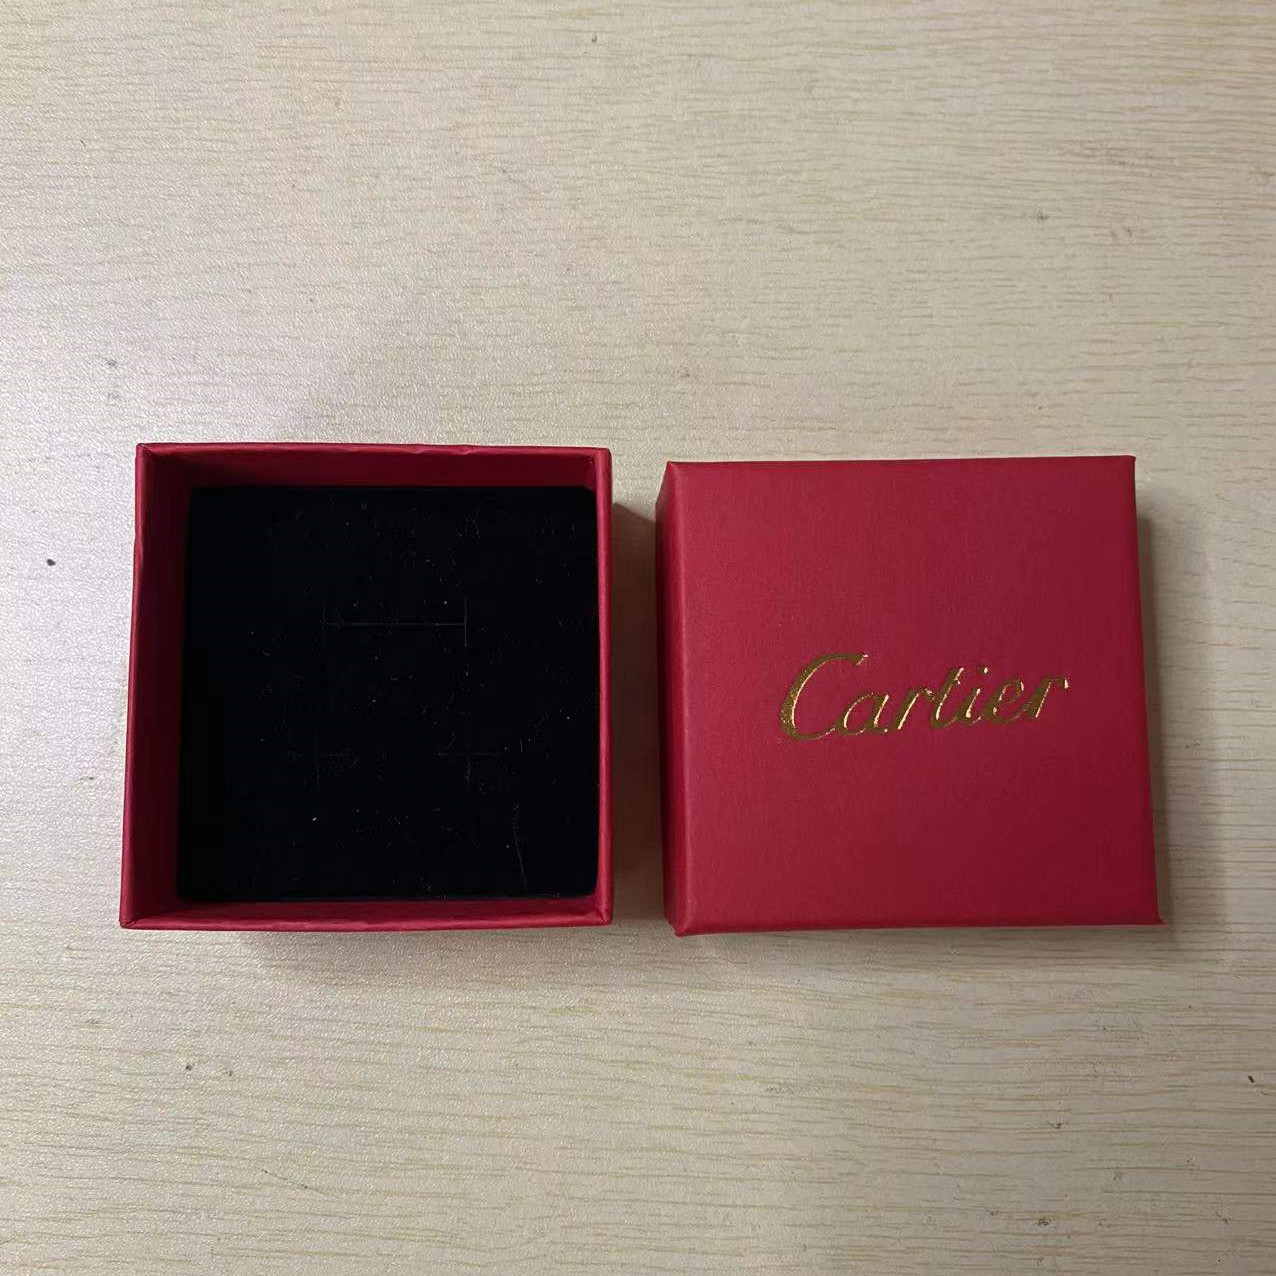 Cartier jewelry box 1pcs